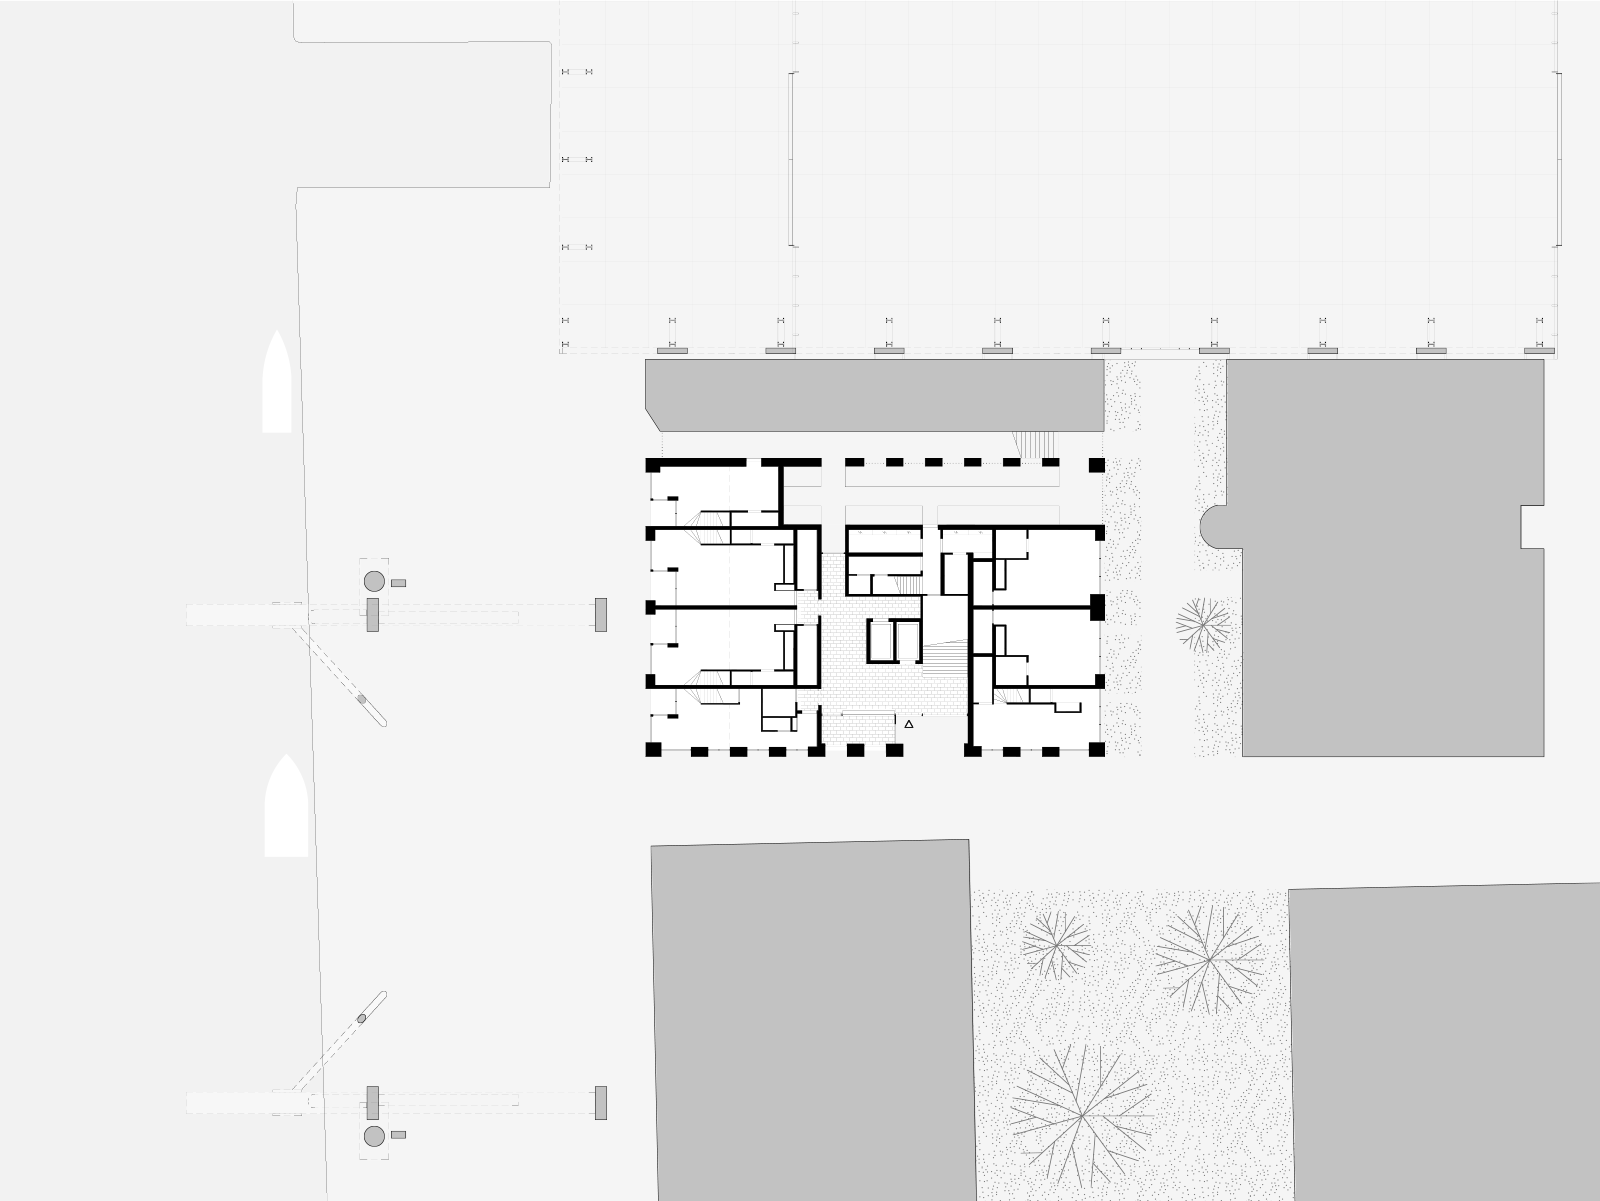 drawing plan ground floor Oostenburg apartment block by beta architect amsterdam evert klinkenberg gus auguste van oppen